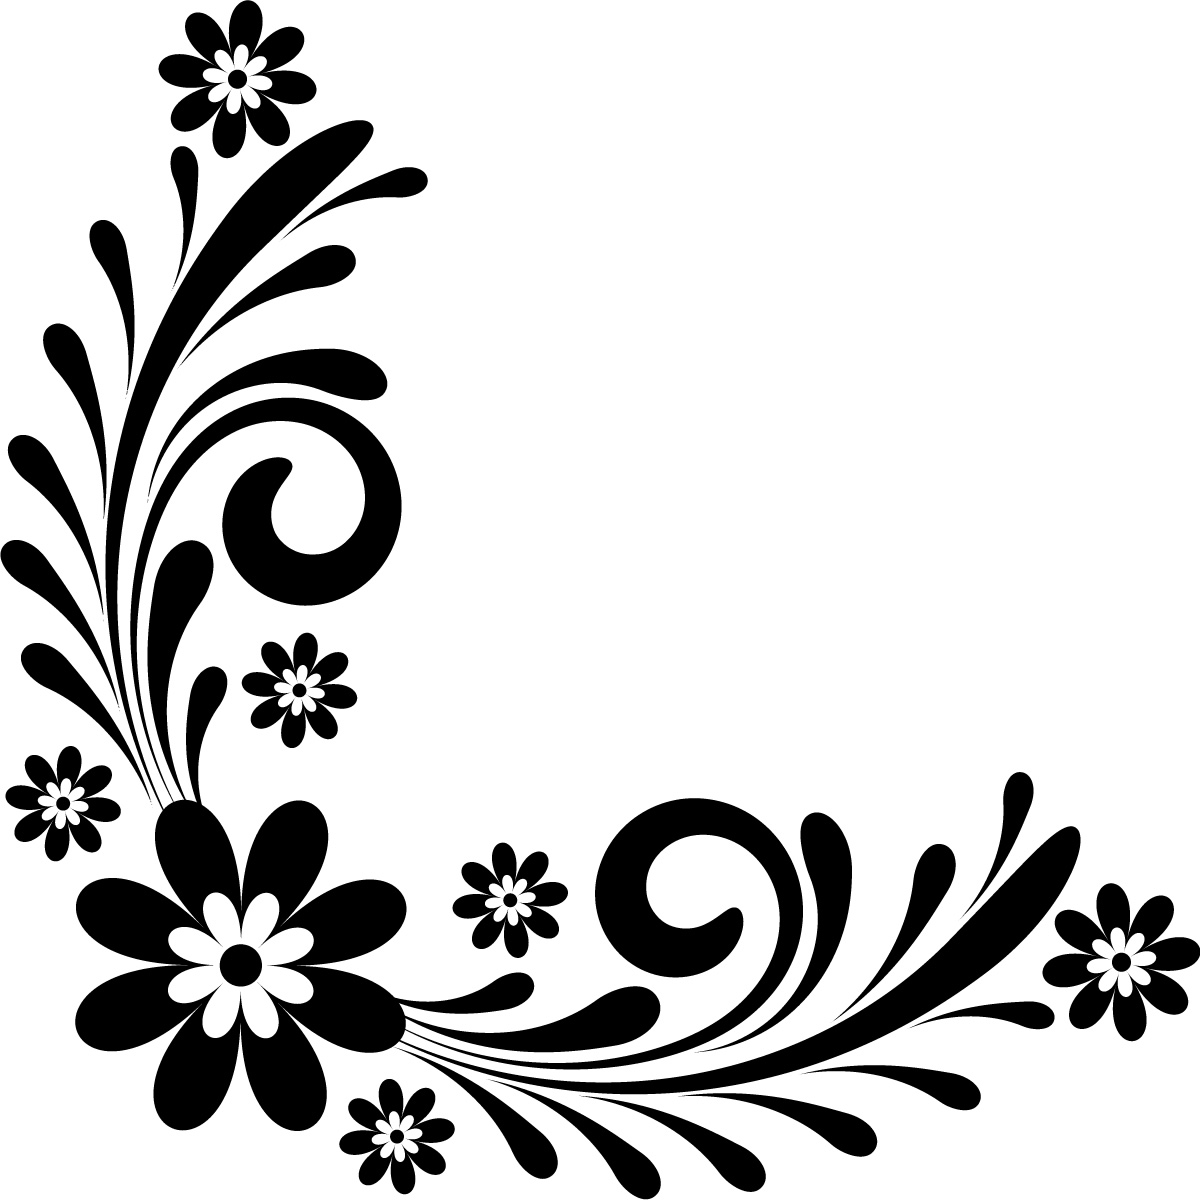 Simple floral border design black and white.